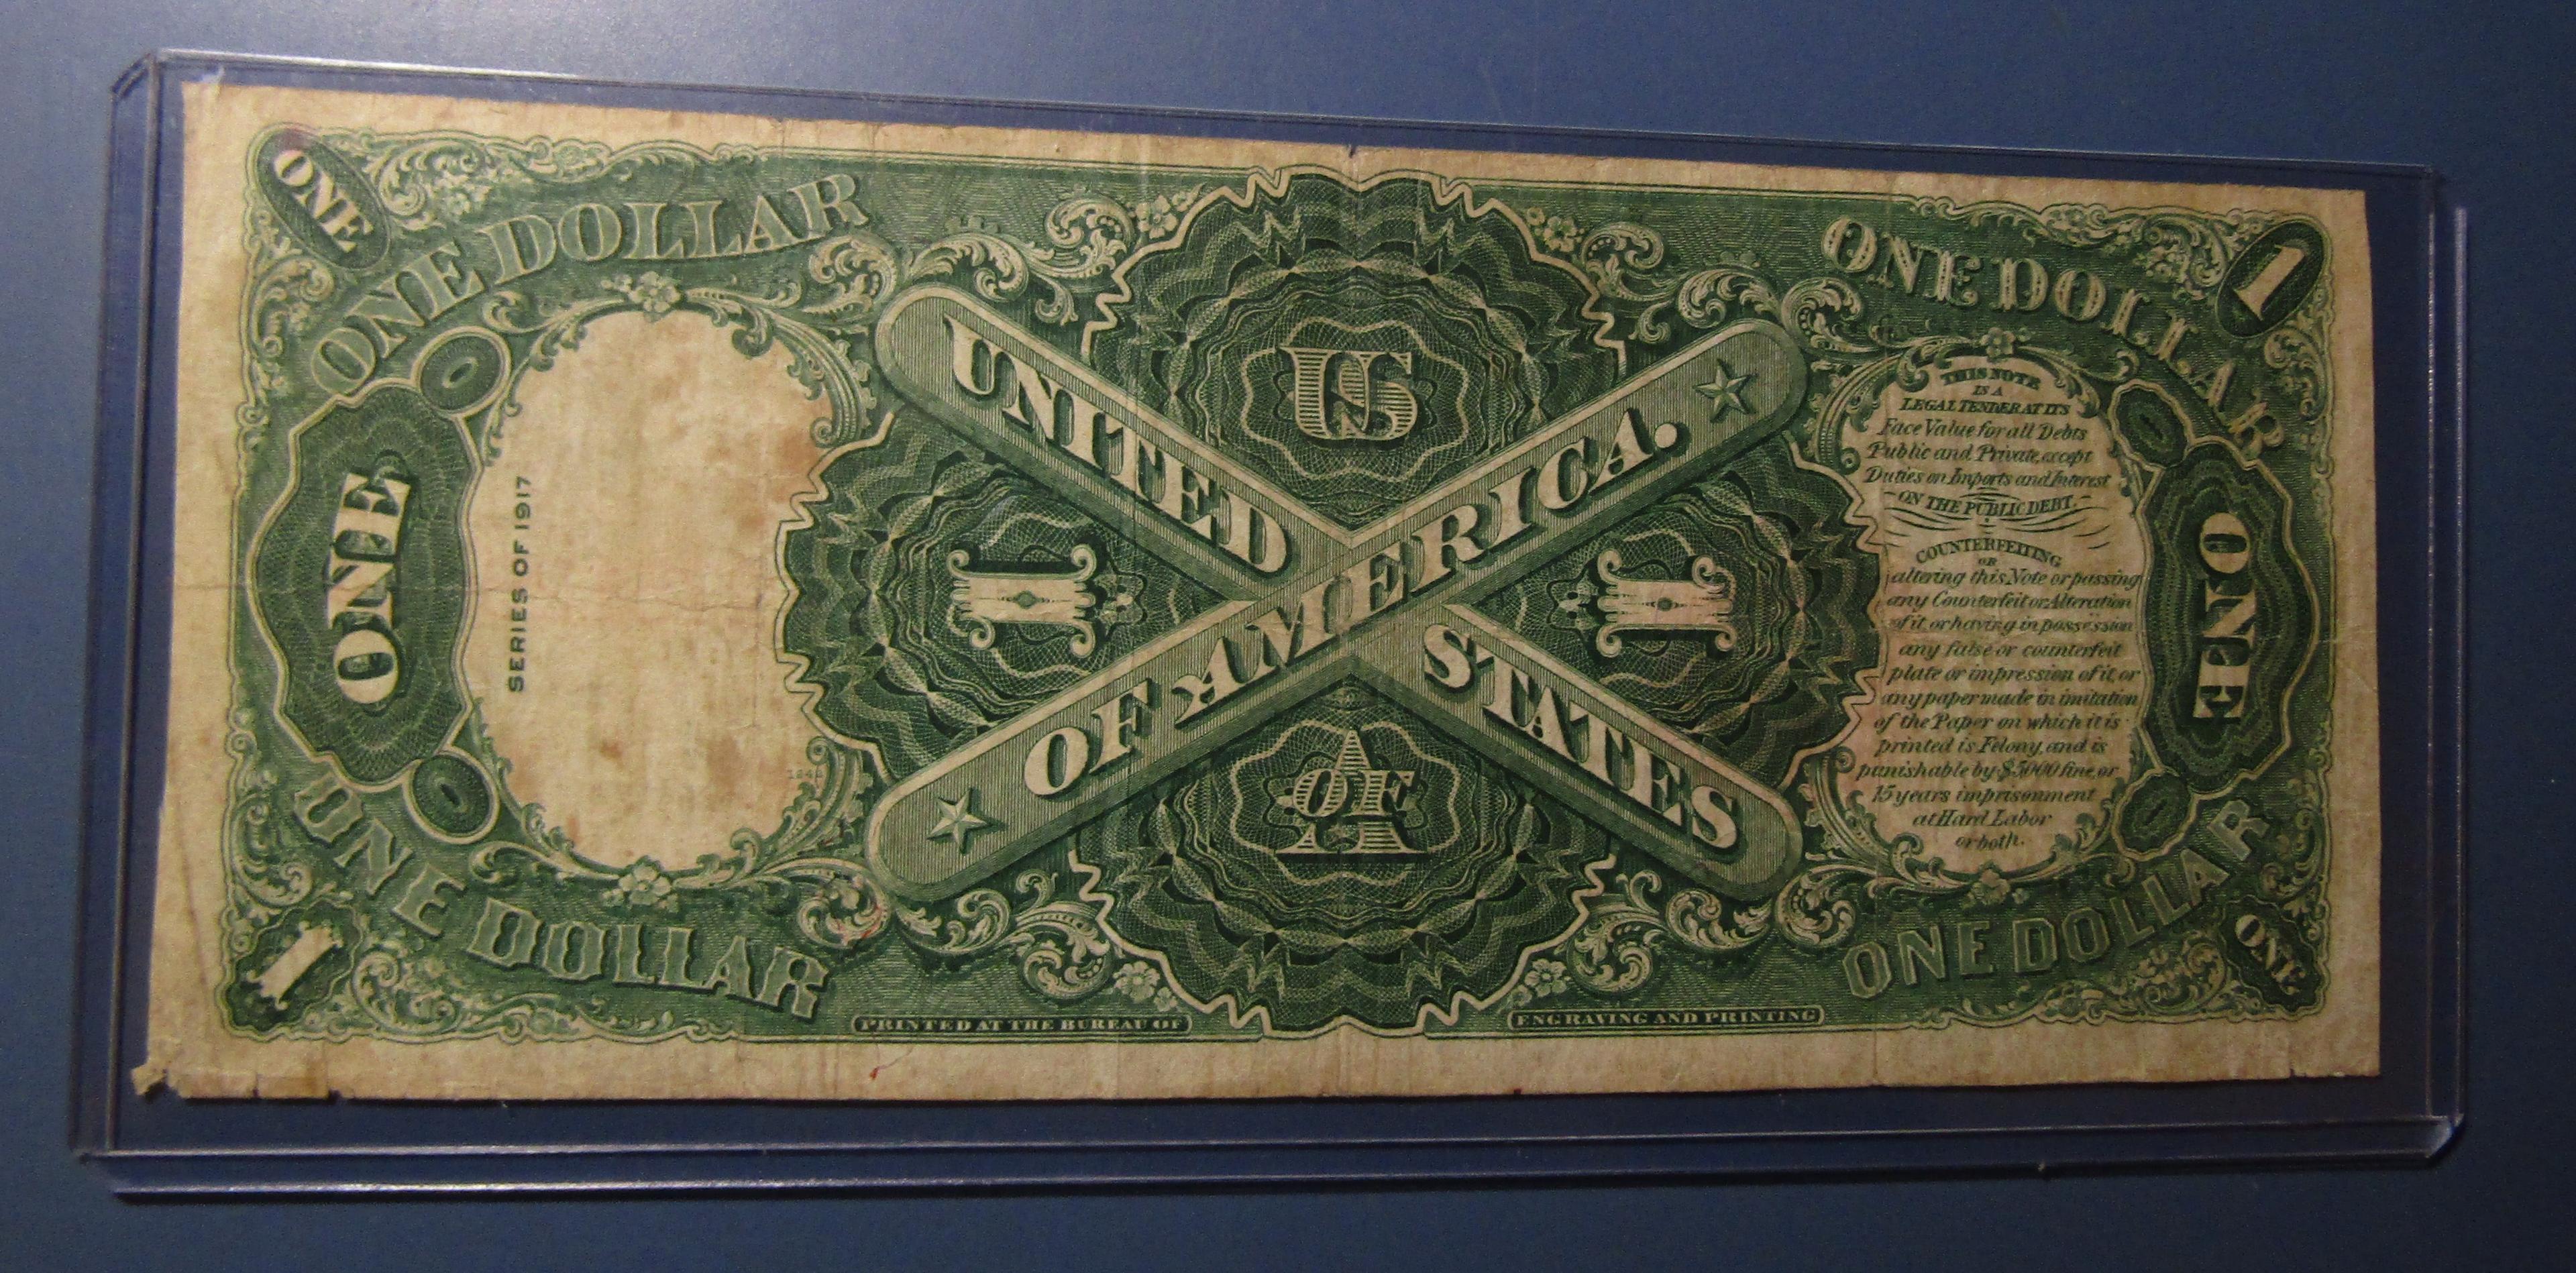 1917 $1.00 LEGAL TENDER NOTE VF/XF